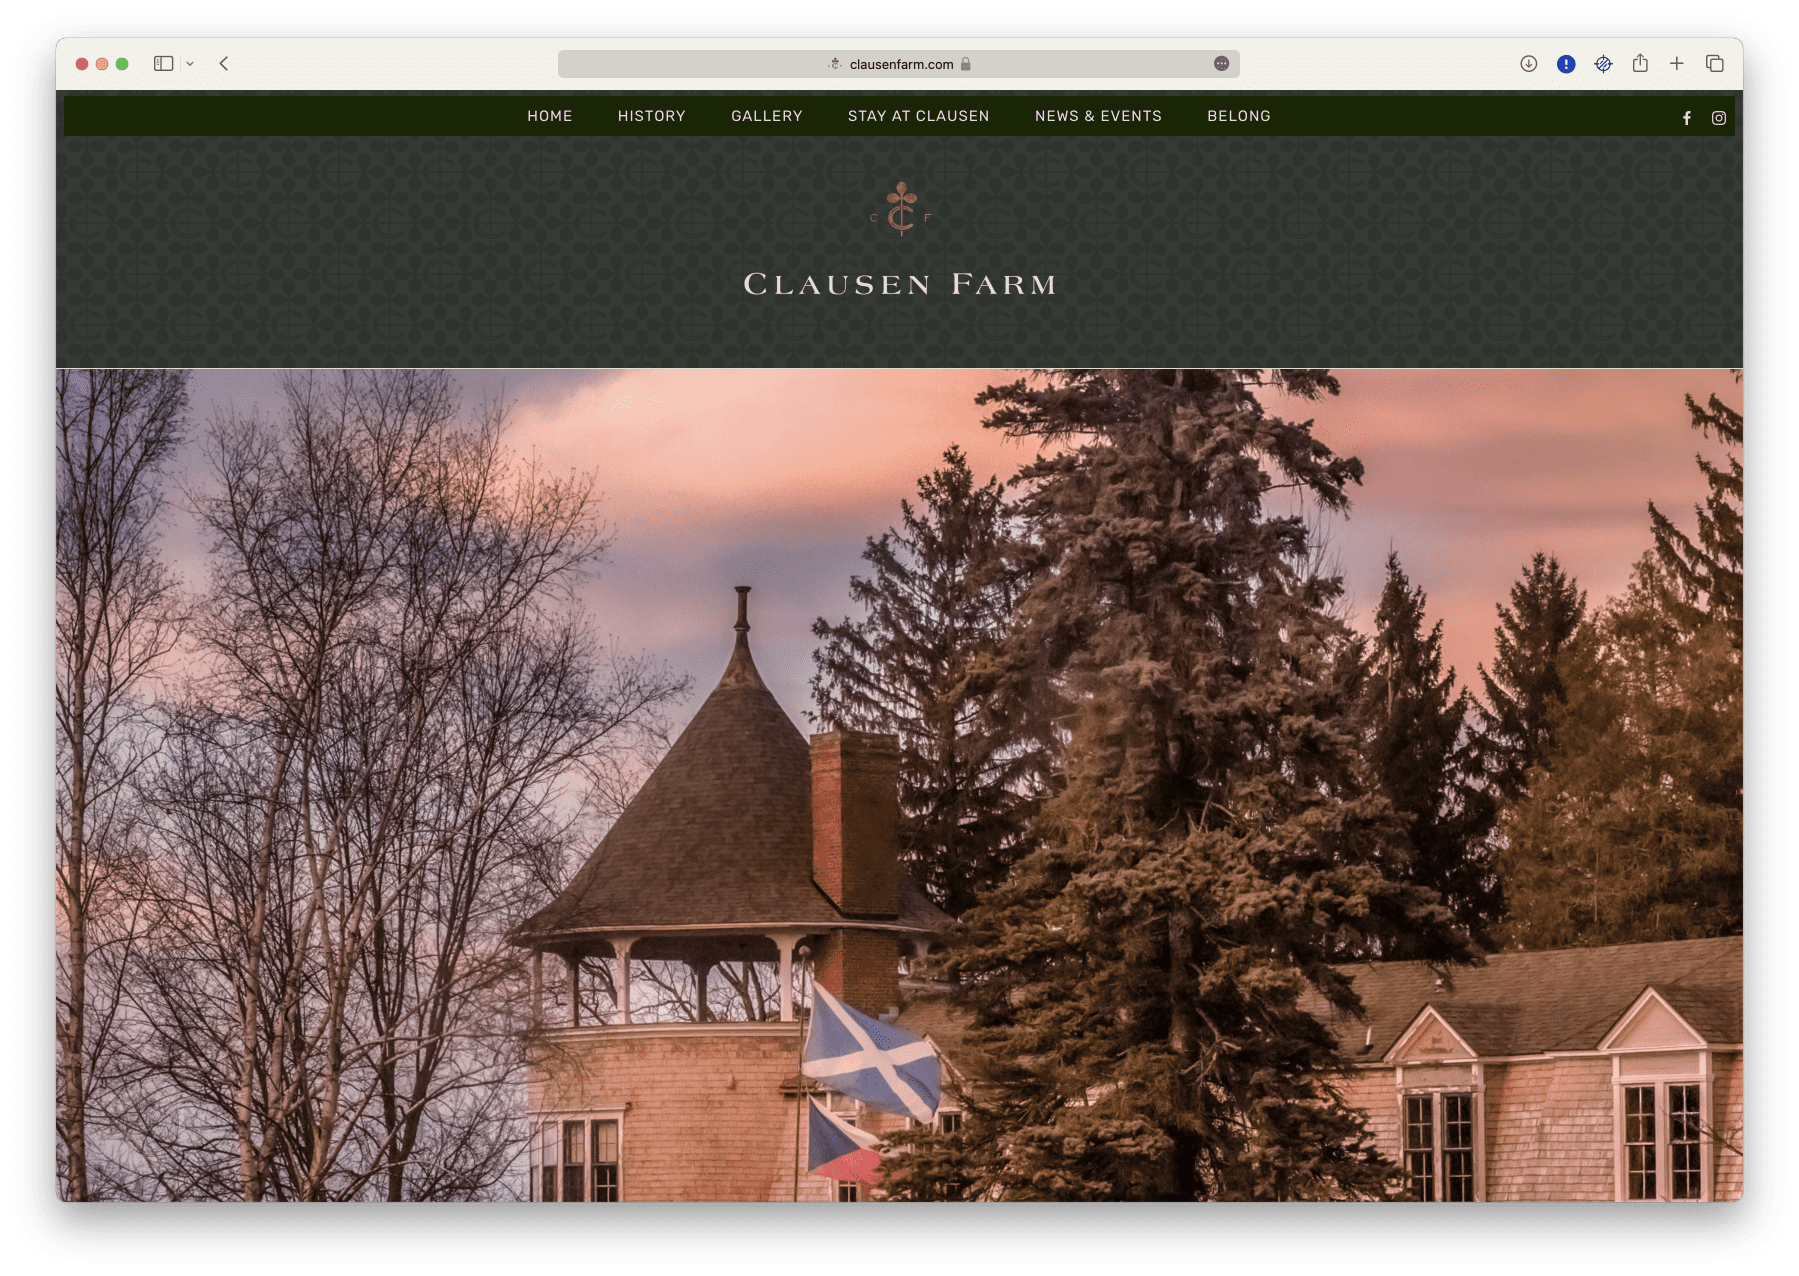 The Clausen Farm website.